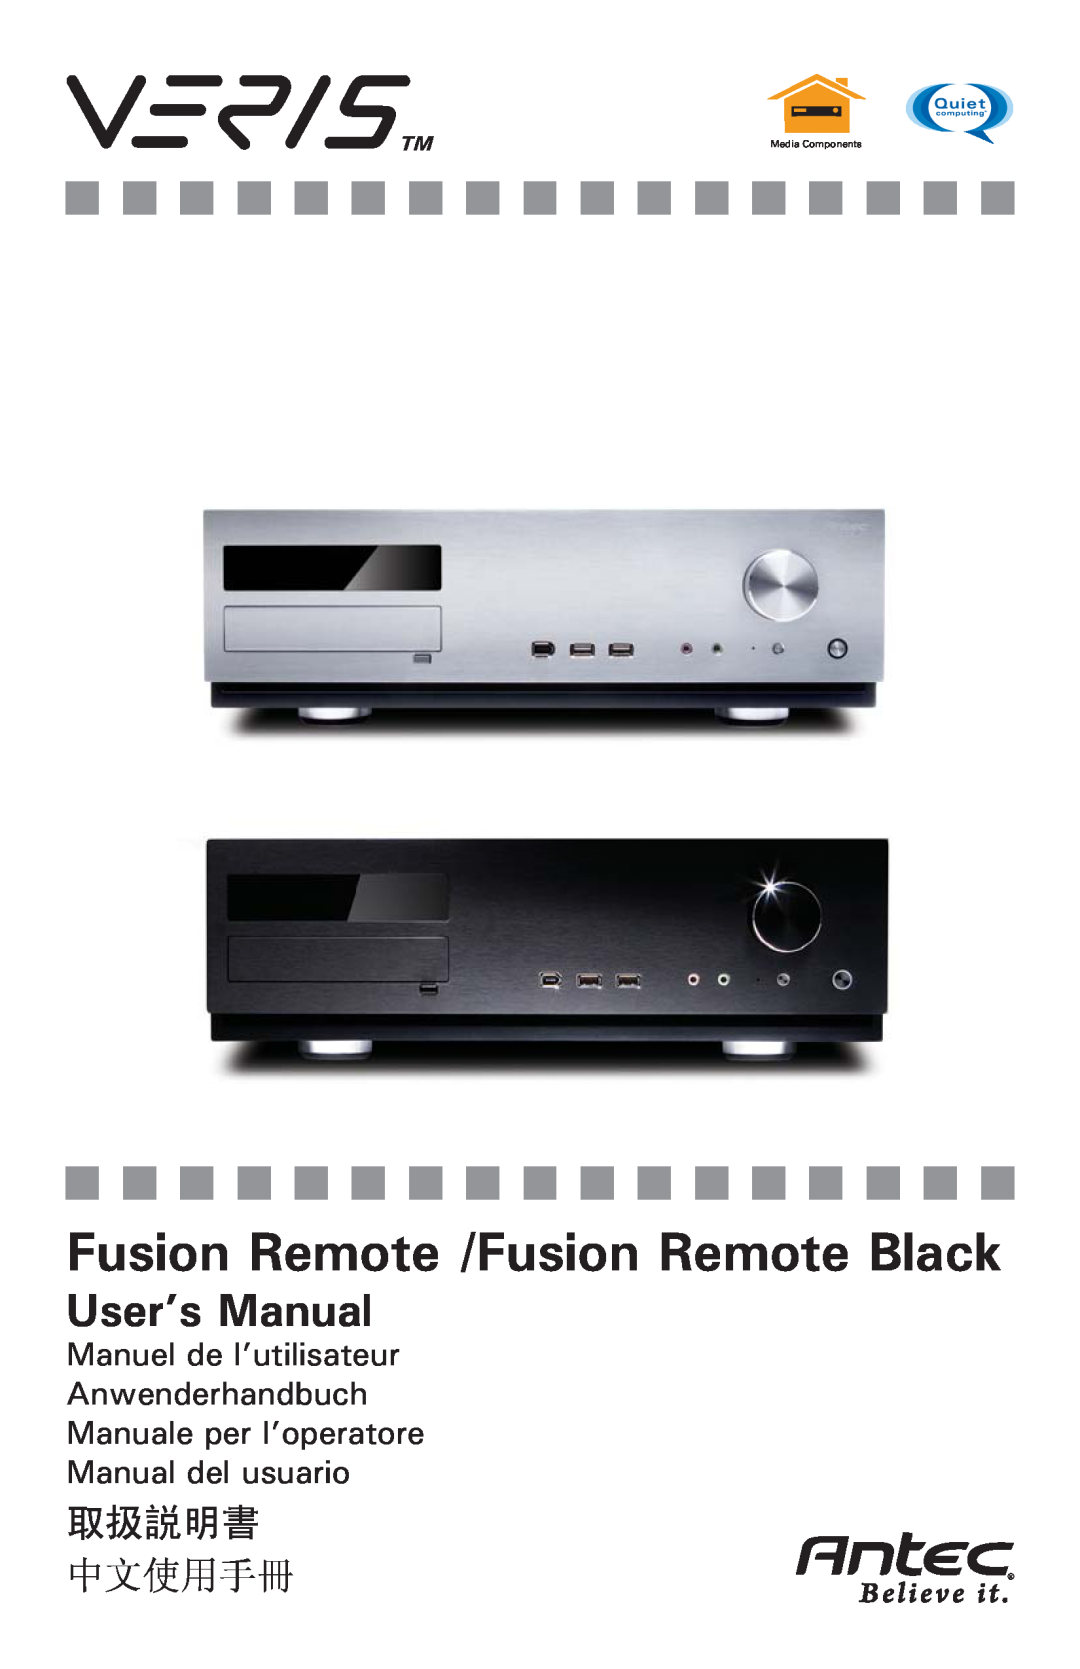 Antec user manual Fusion Remote /Fusion Remote Black, Manuel de l’utilisateur Anwenderhandbuch, Media Components 